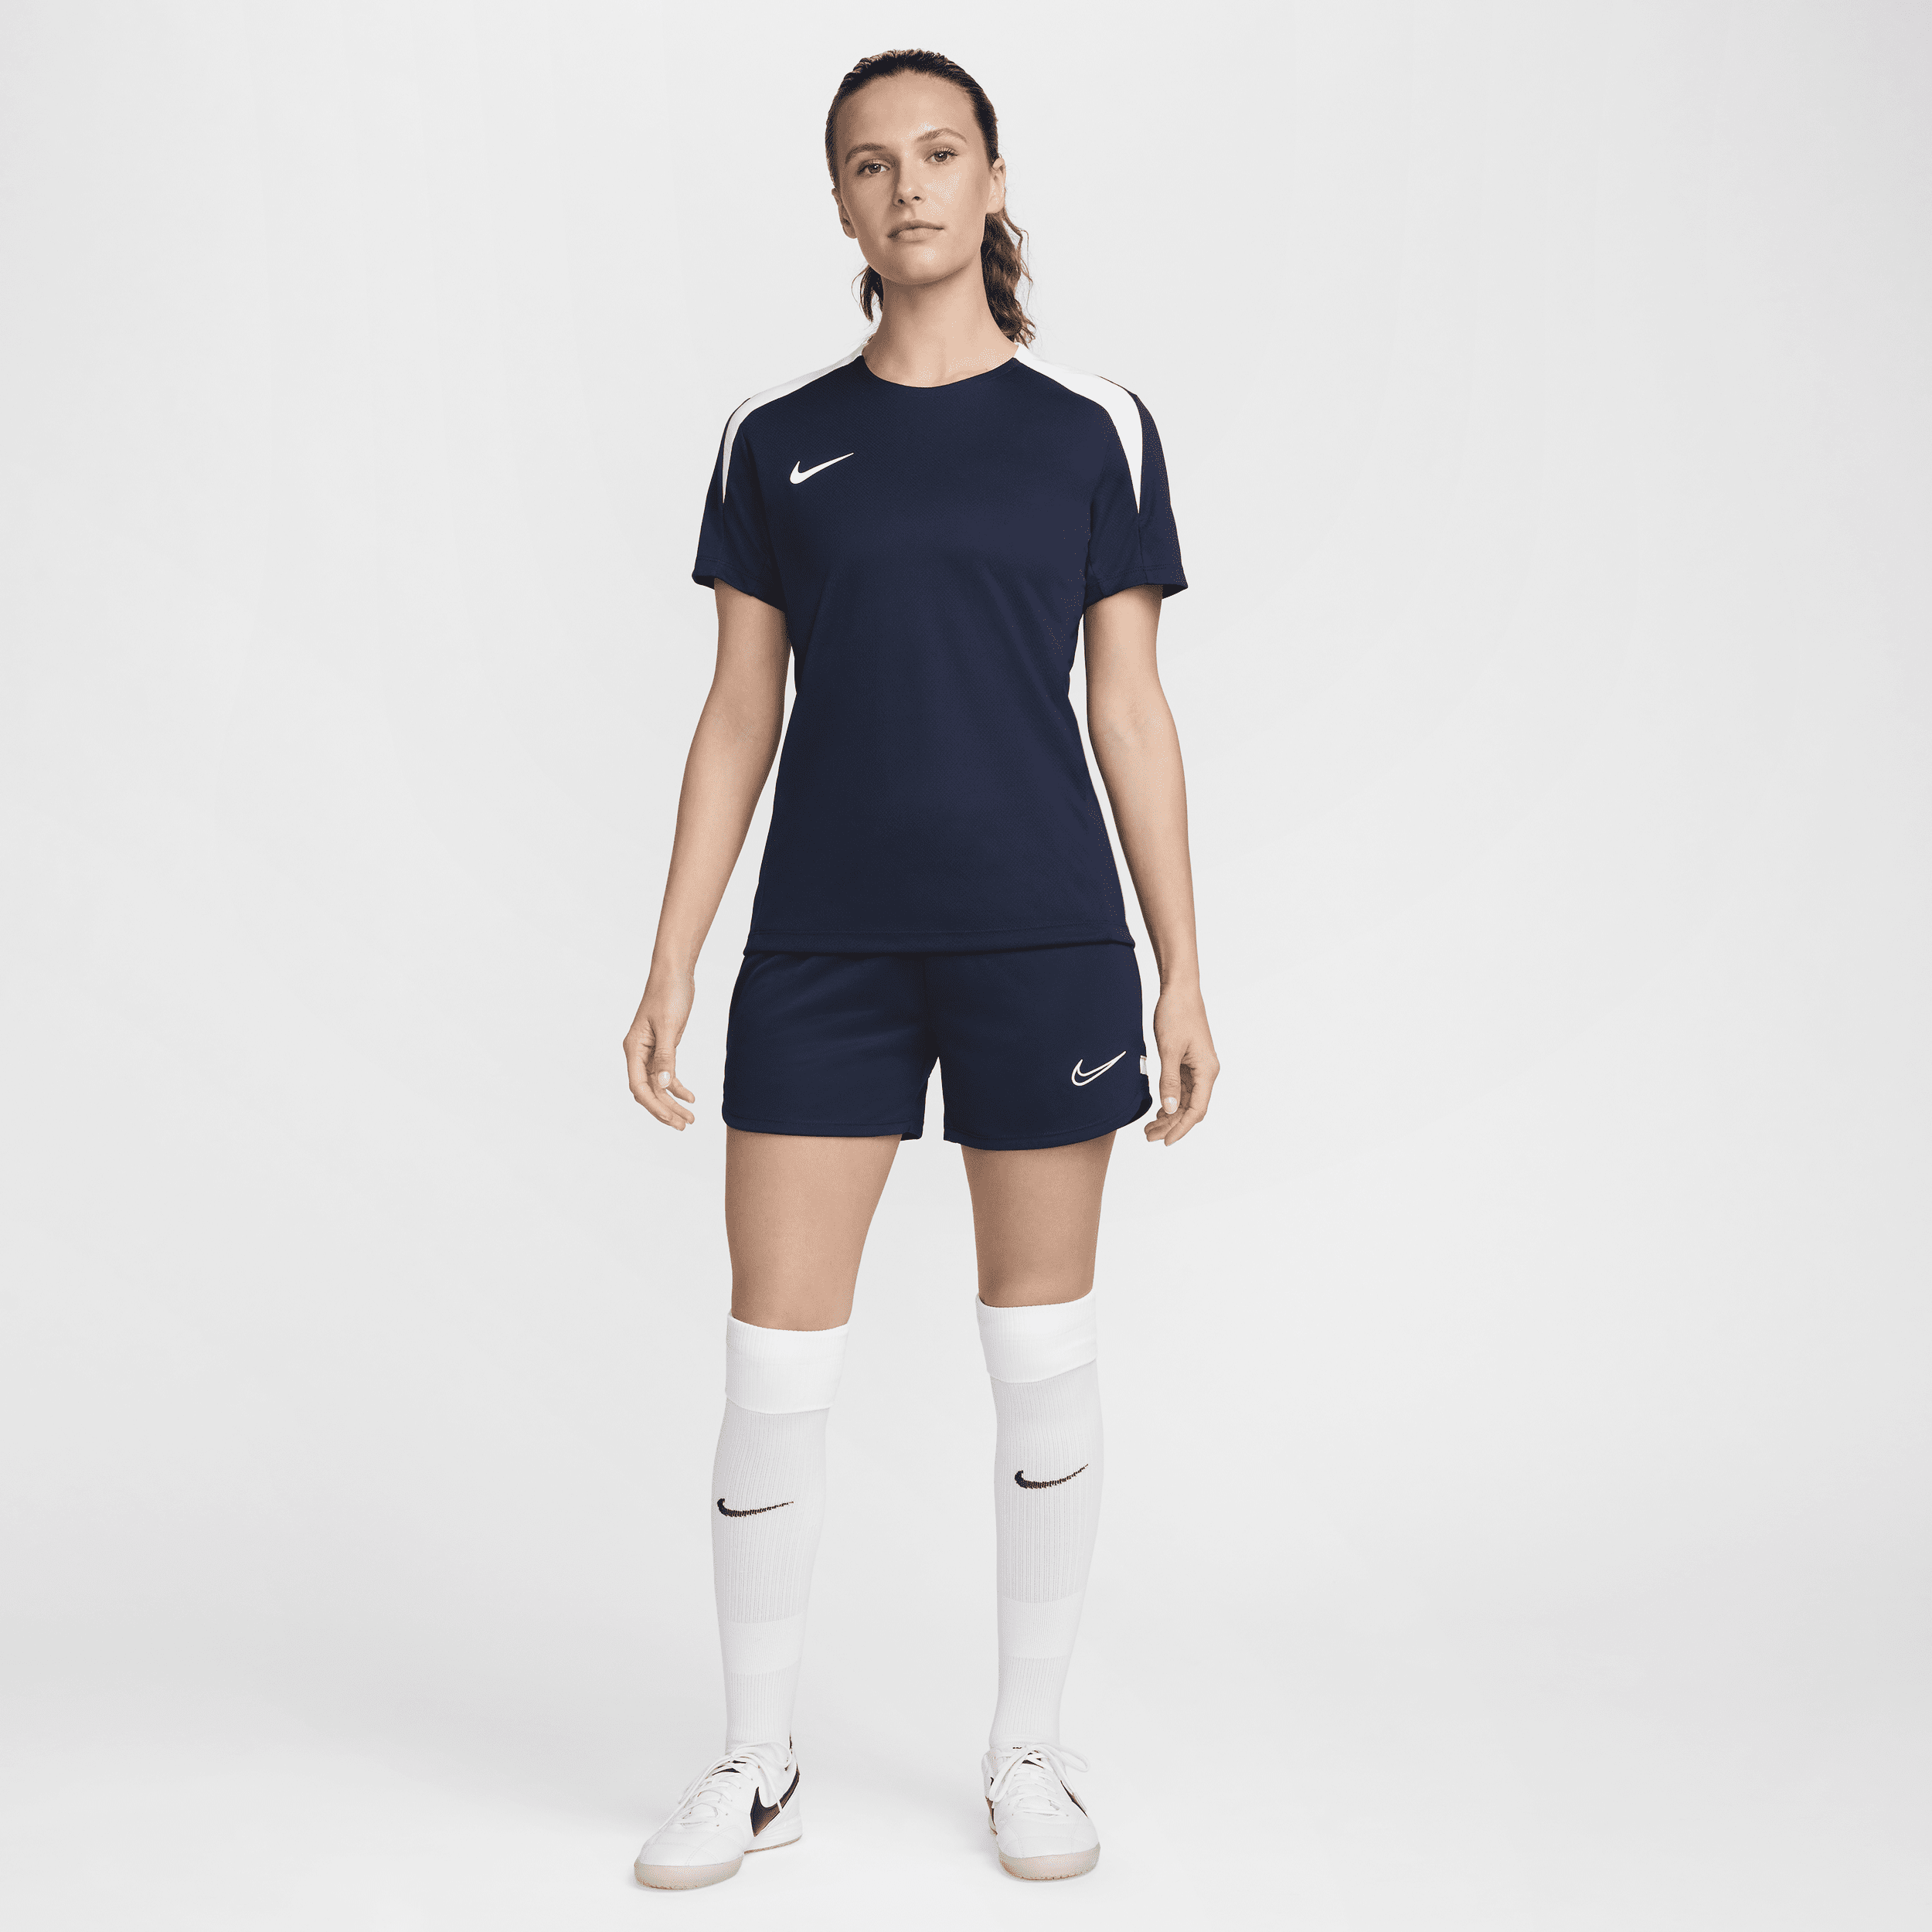 Nike Strike voetbaltop met Dri-FIT en korte mouwen voor dames Blauw